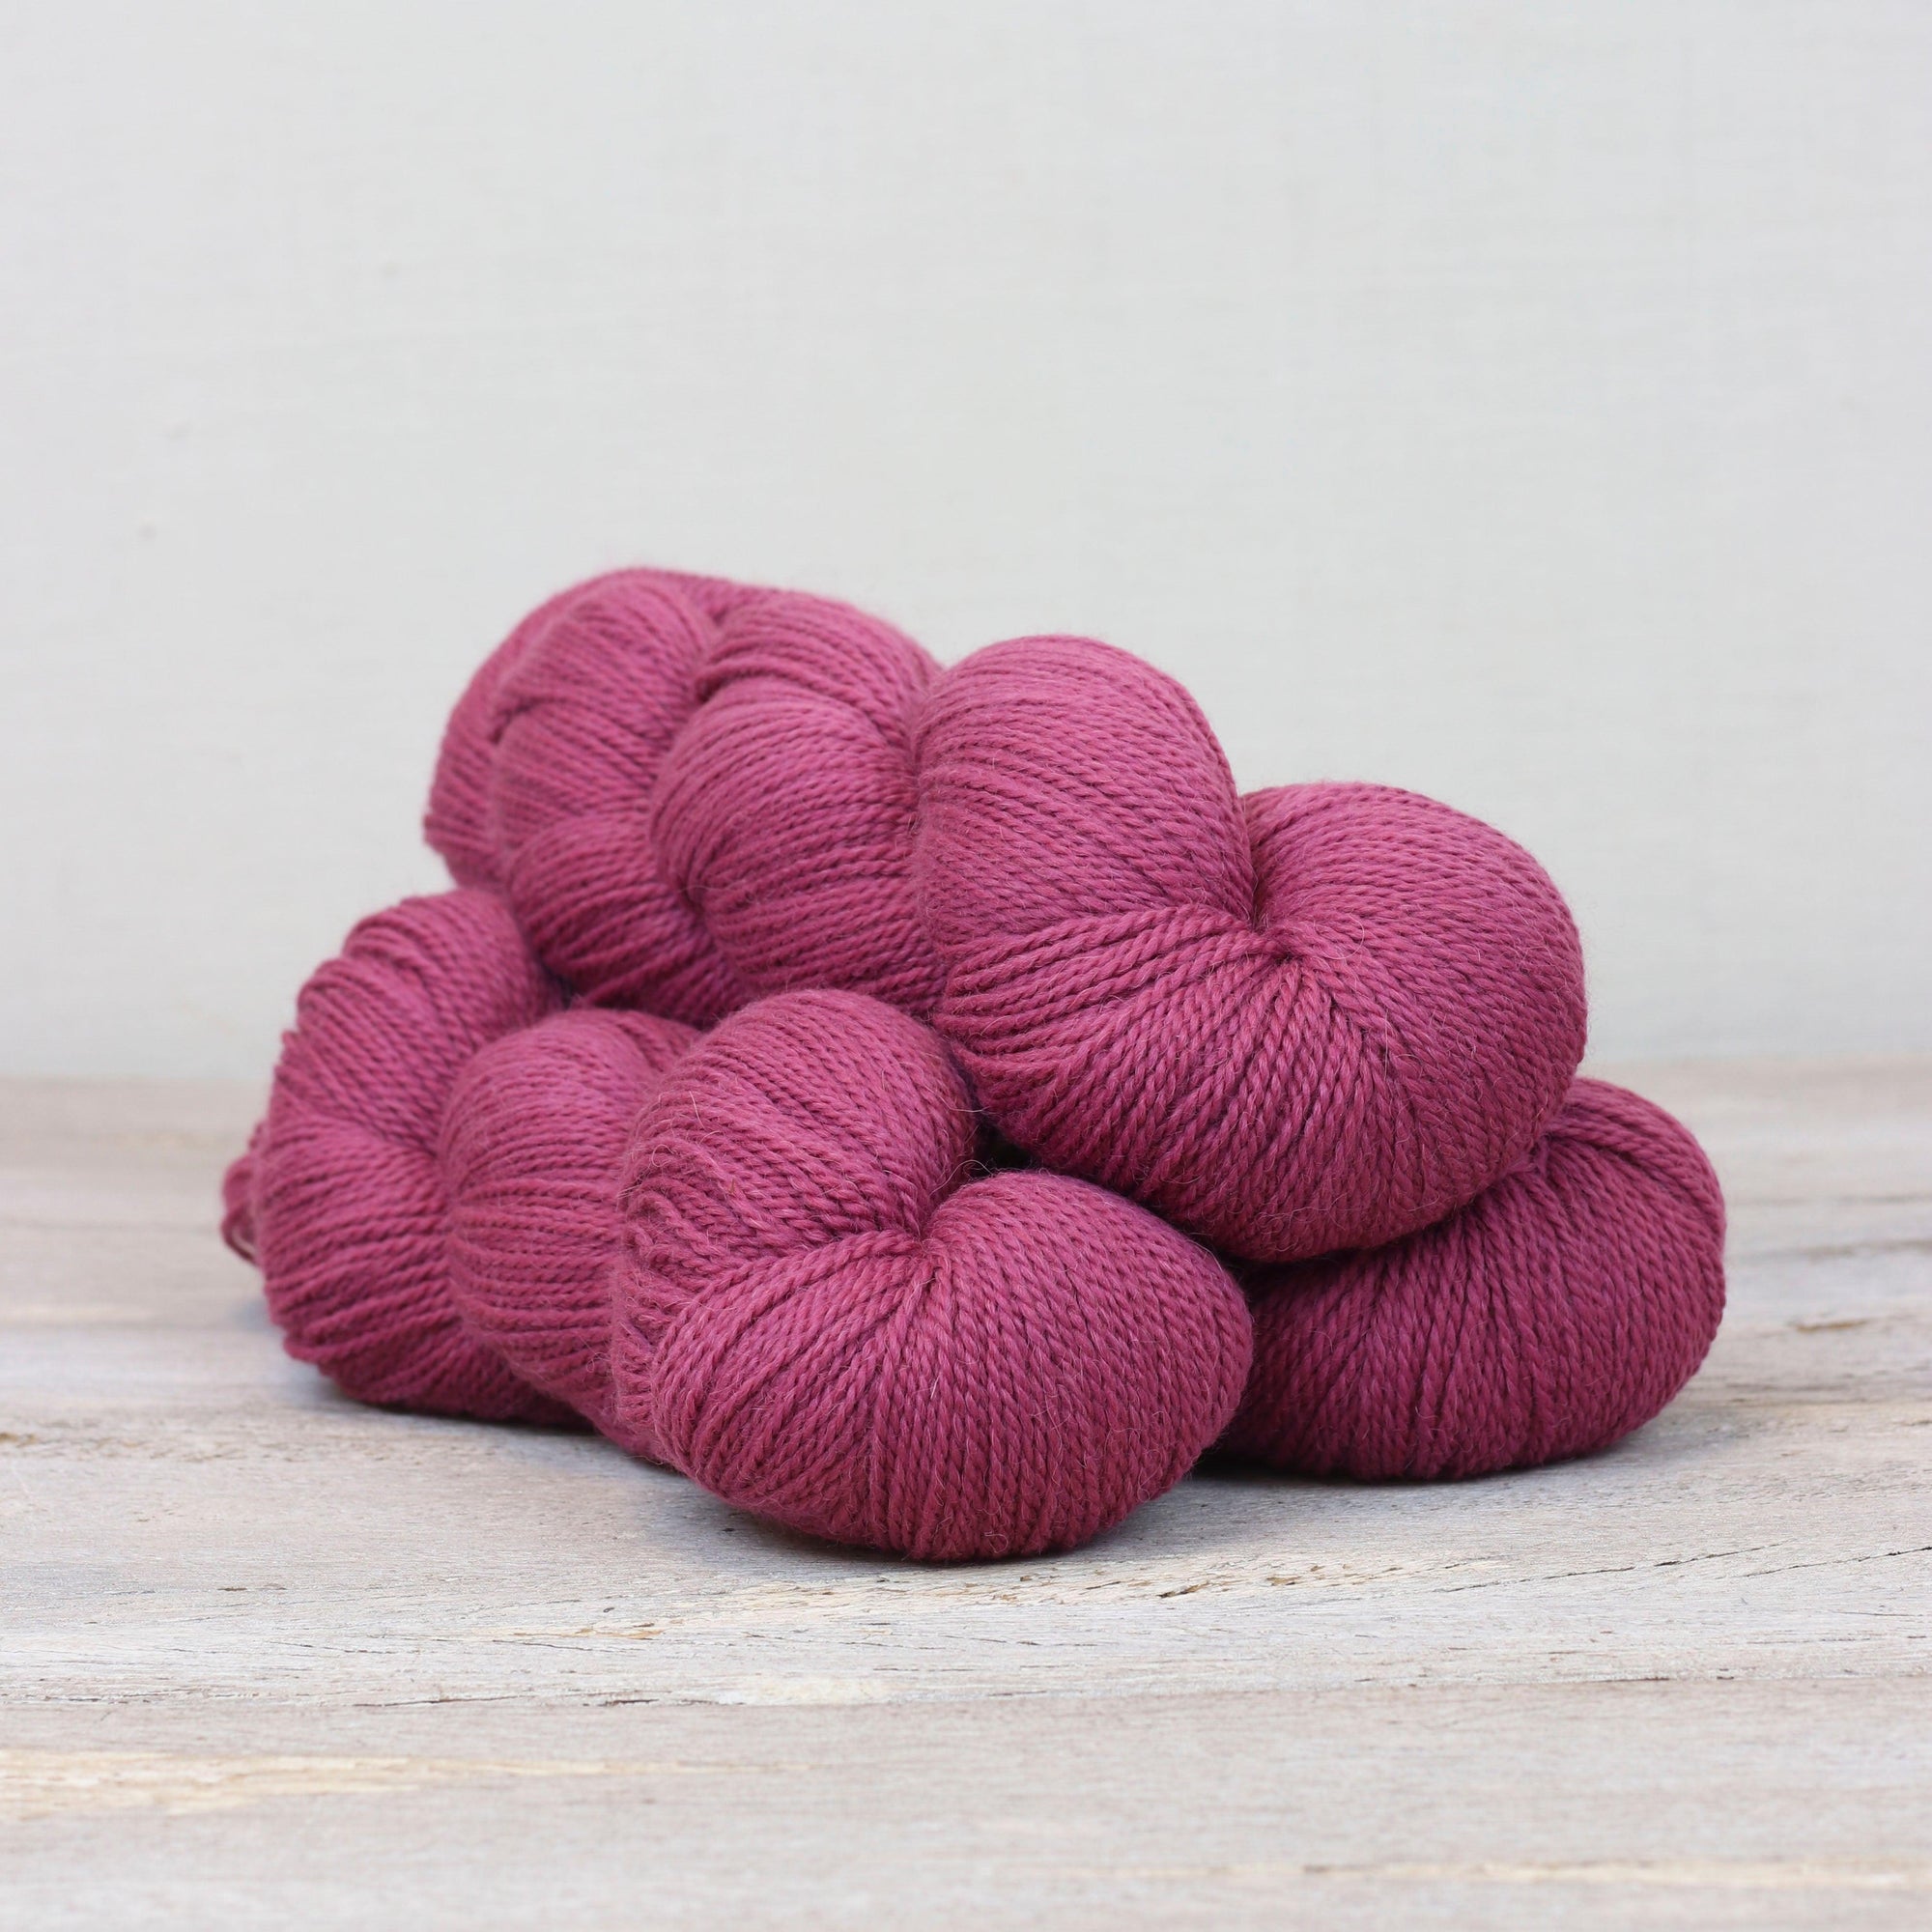 The Fibre Co. The Fibre Co. Amble - Walk Me Home - 4ply Knitting Yarn